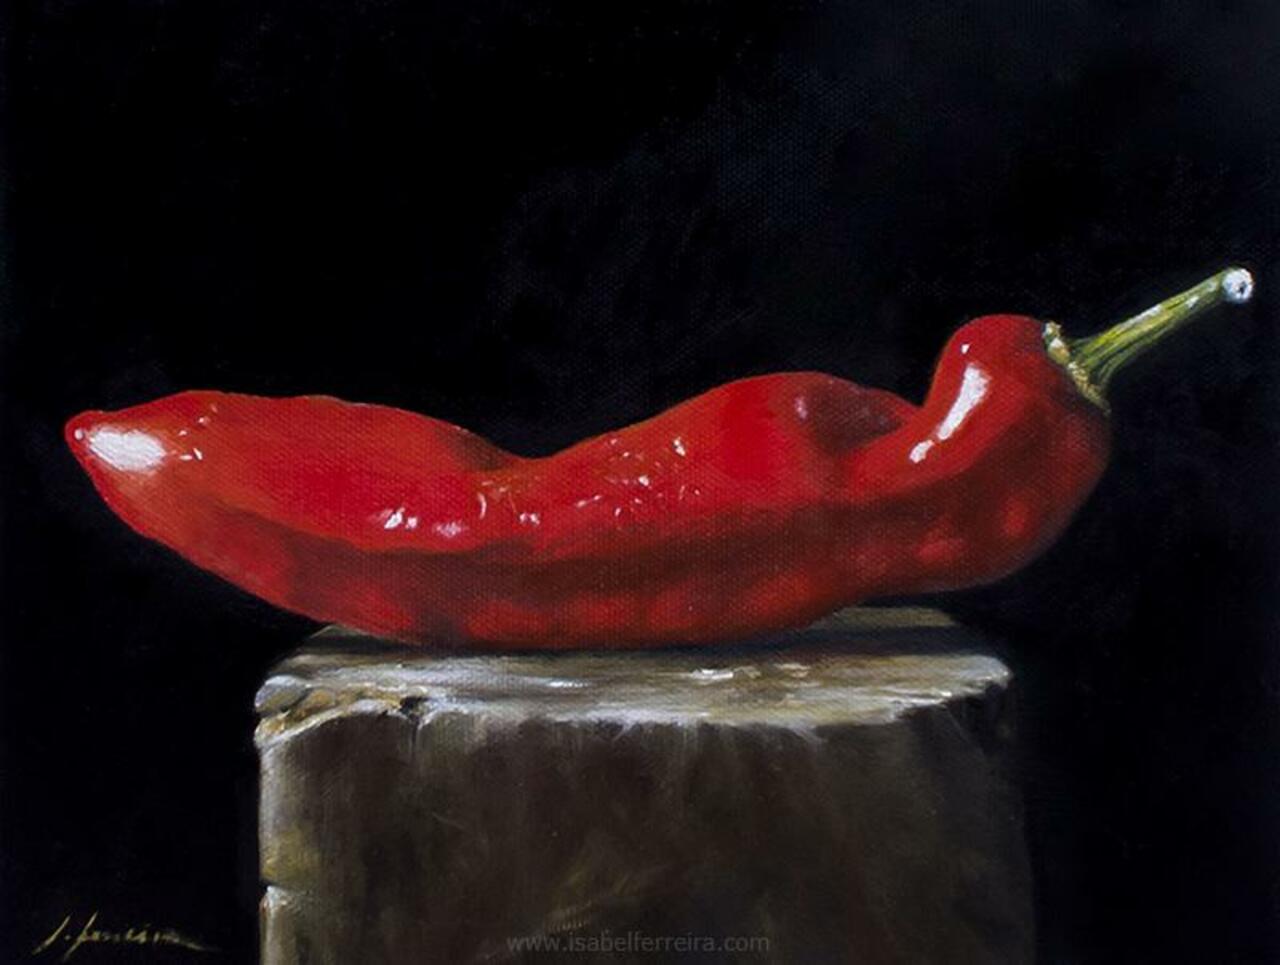 Long sweet pepper #painting #art #StillLife @SaatchiArt http://www.saatchiart.com/art/Painting-Long-sweet-pepper/681531/2137259/view http://t.co/GE6ETXDnMF